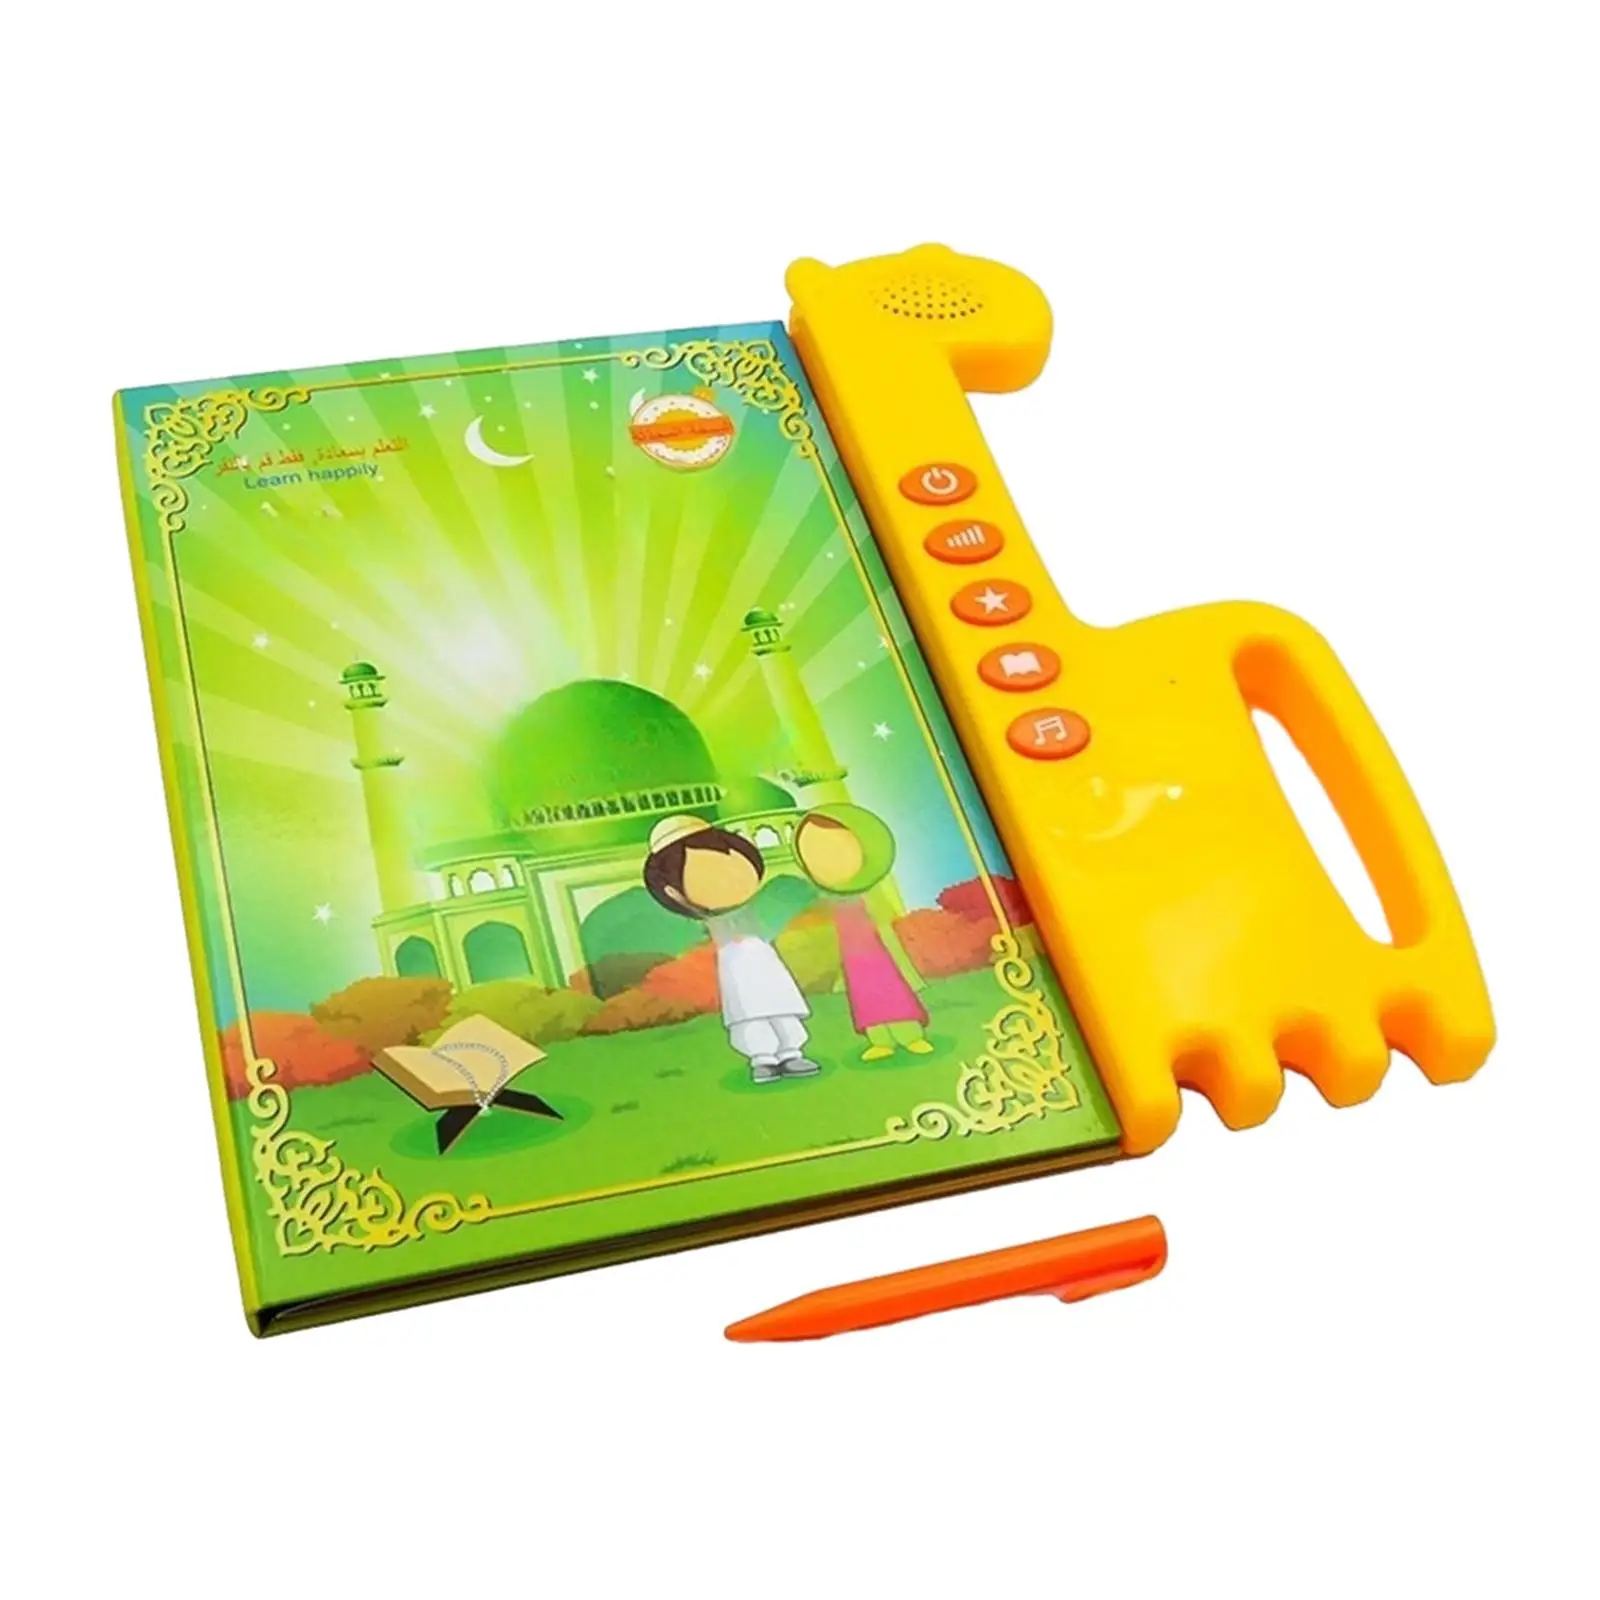 Arabic Learning Book Portable Learning Toy Teaching Aids Developmental Toys Multifunctional for Bithday Gift Children Girls Boys